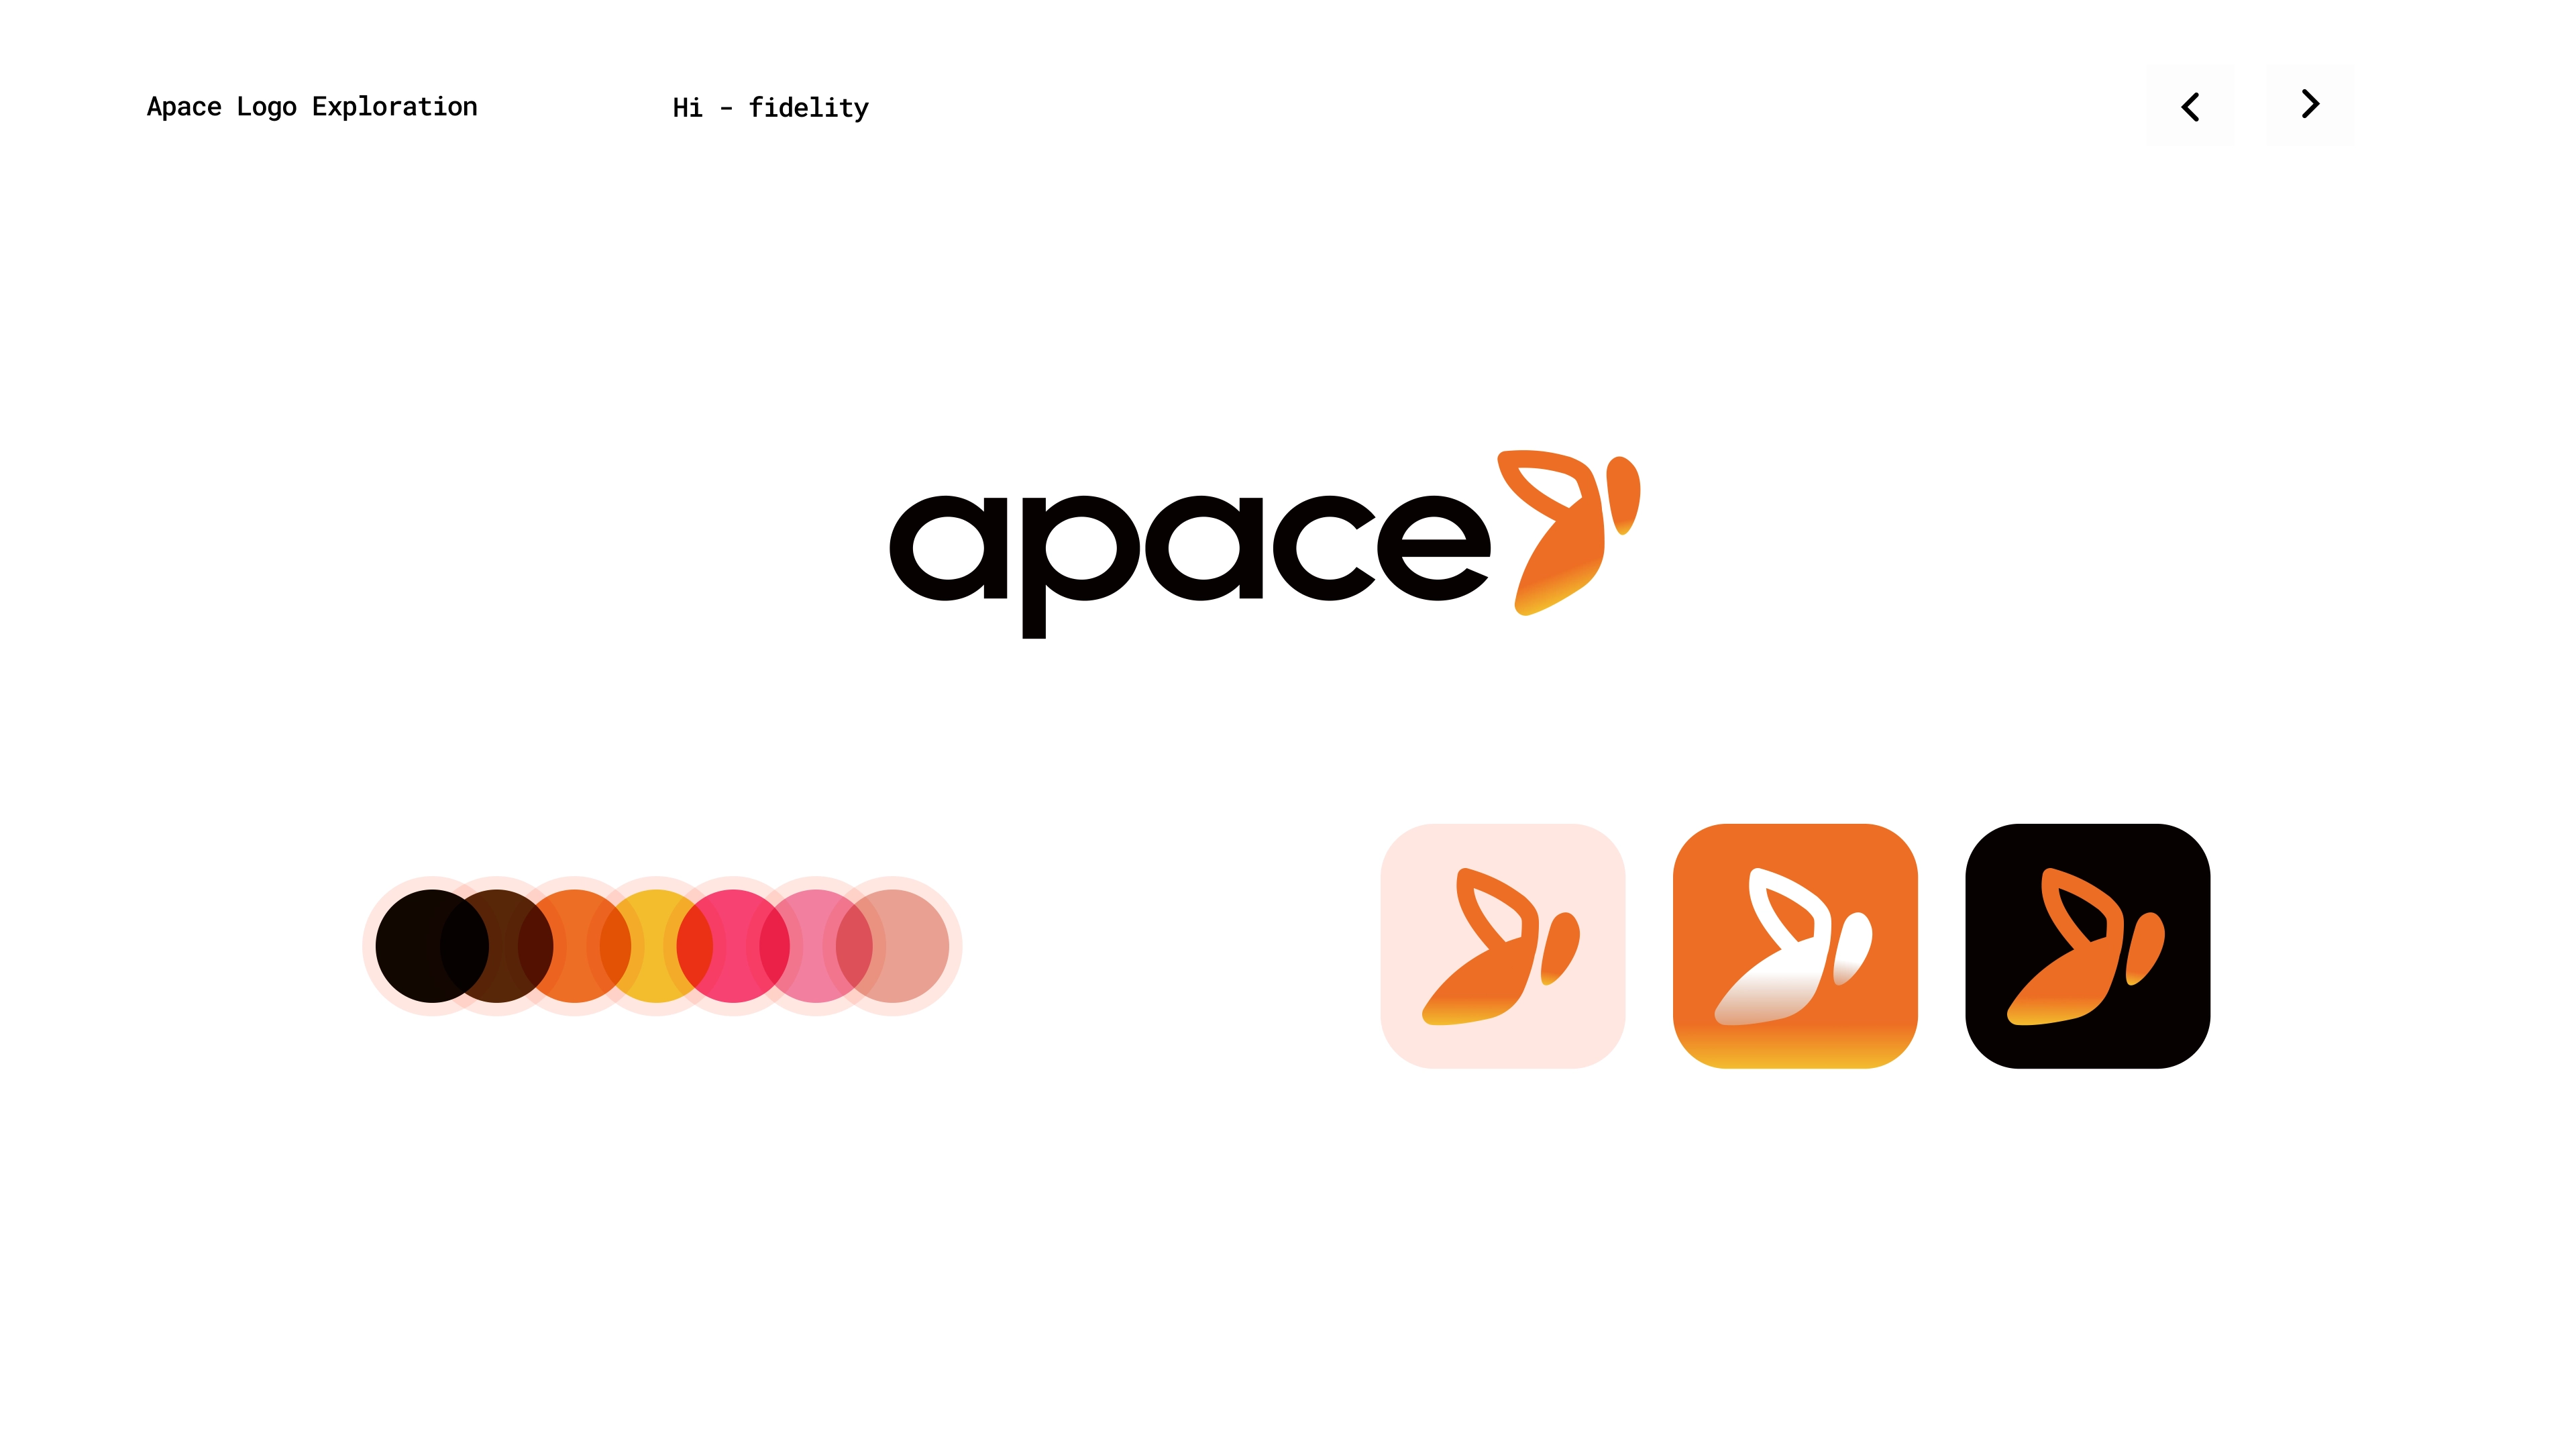 Apace logo exploration